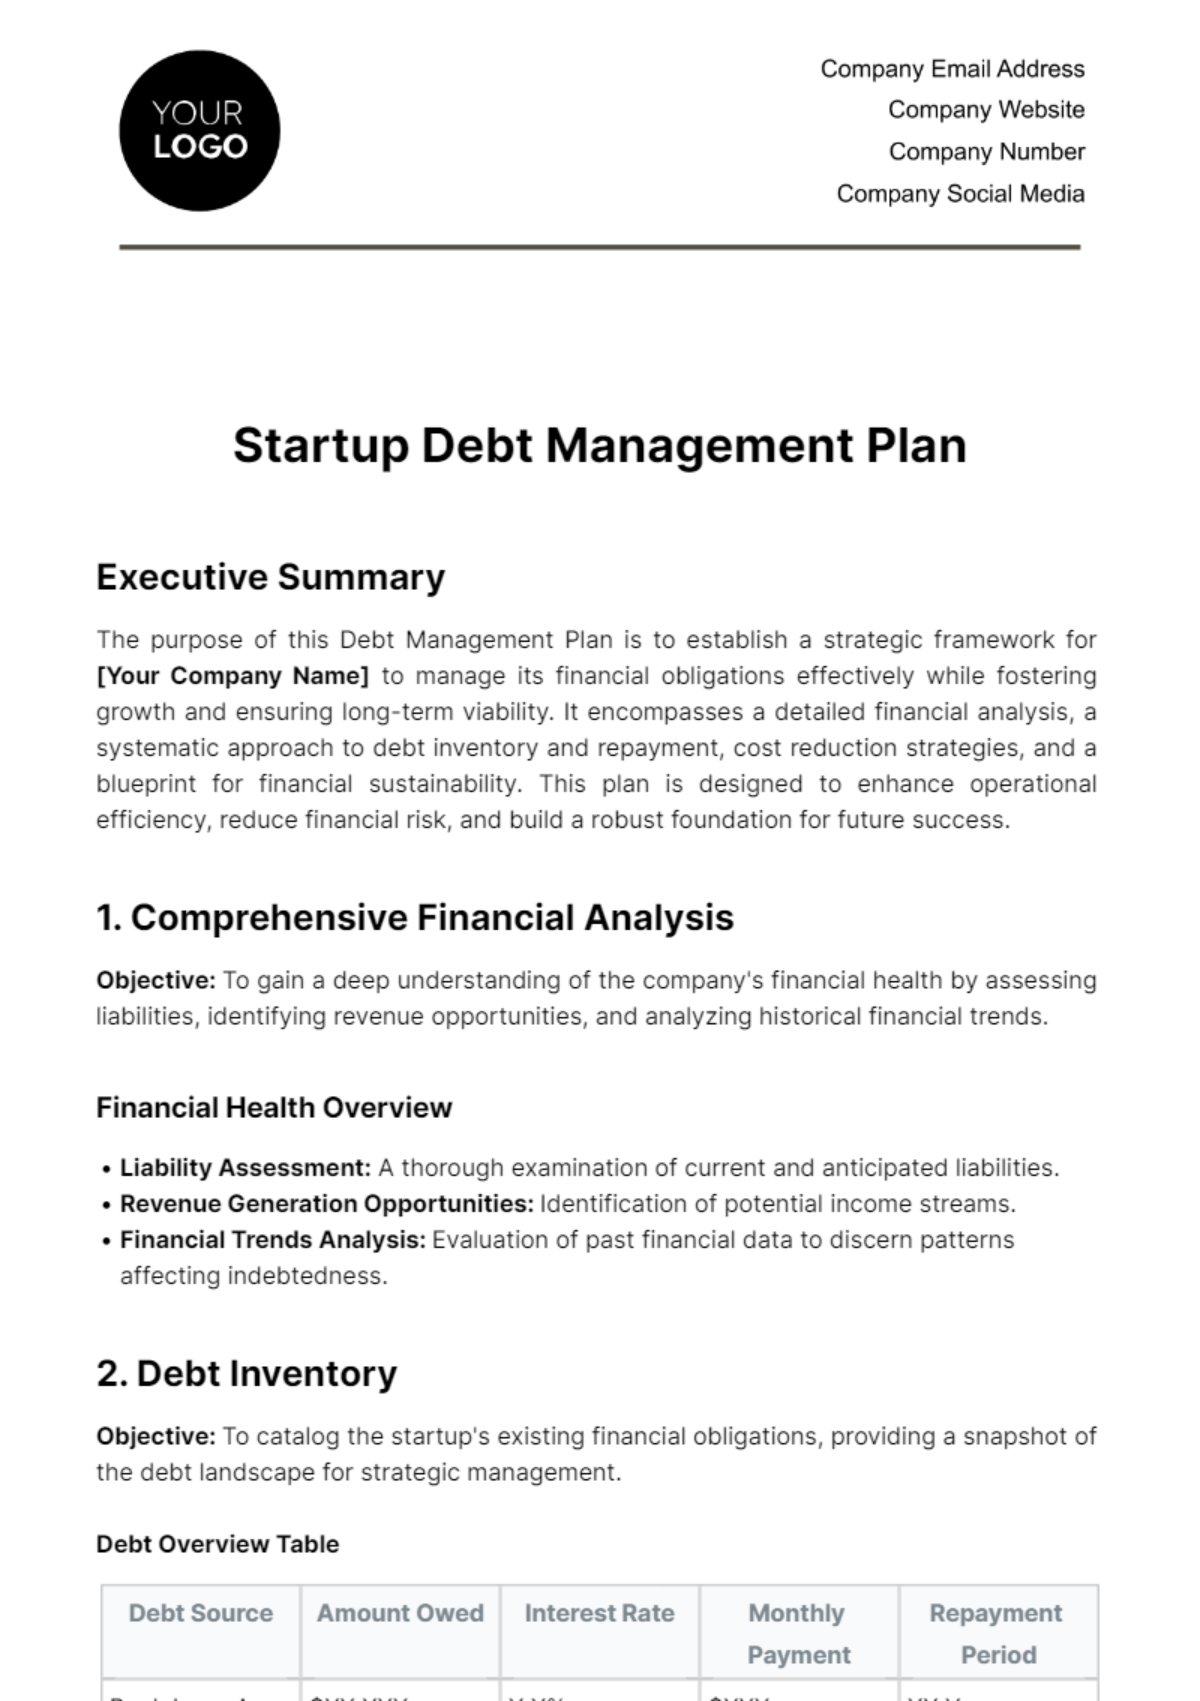 Free Startup Debt Management Plan Template